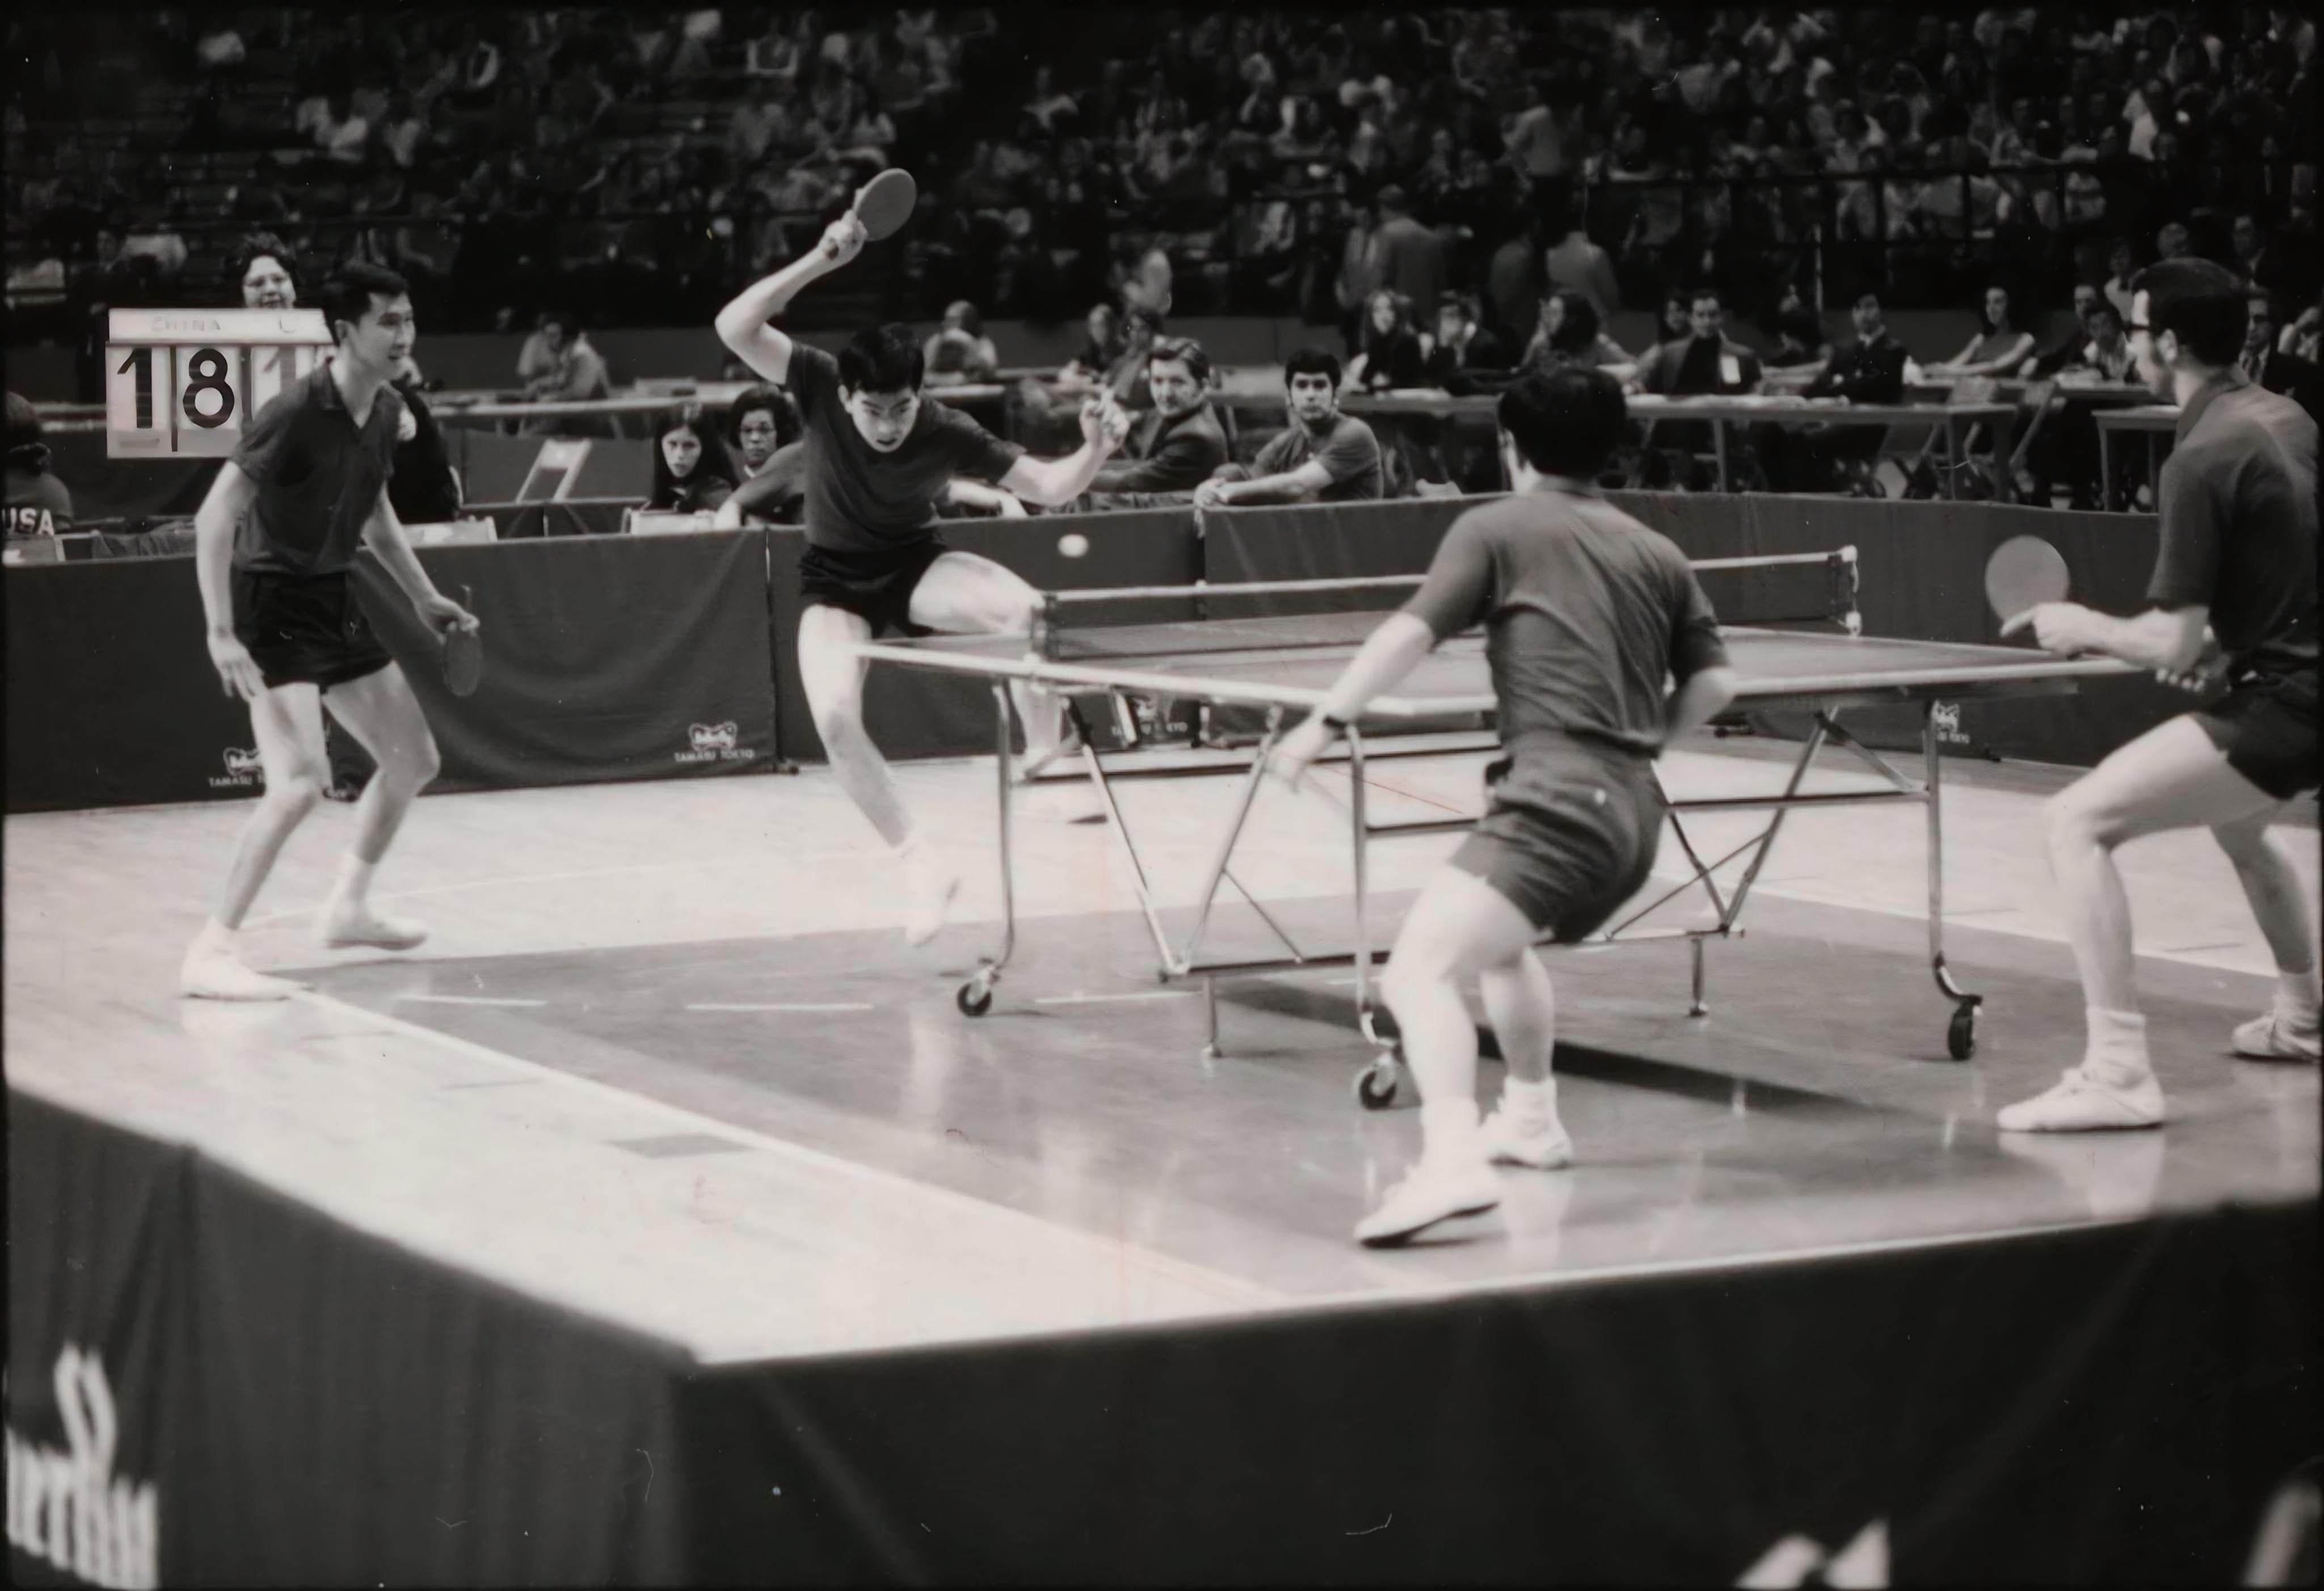 Students volley at the Chinese Ping-Pong diplomacy match, circa 1972.